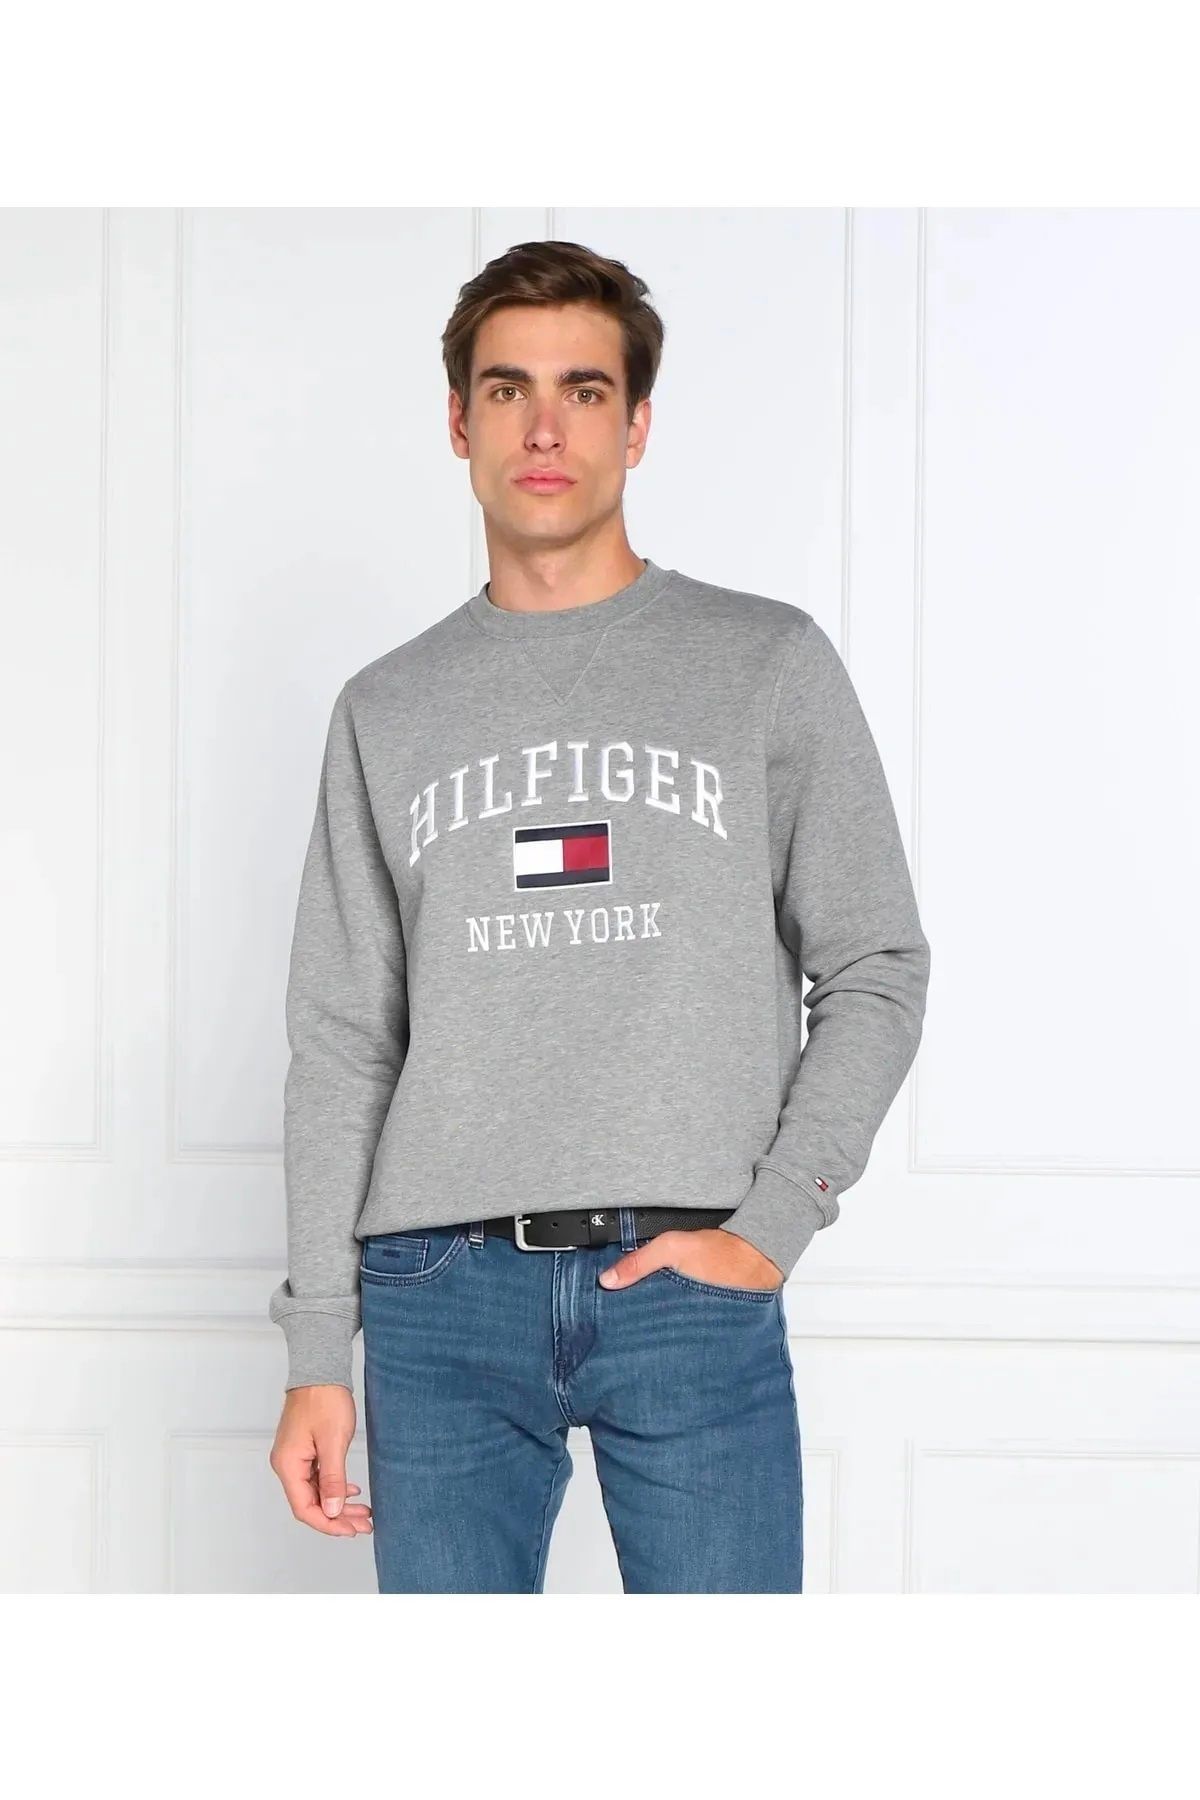 Tommy Hilfiger Regular Fit Sweatshirt